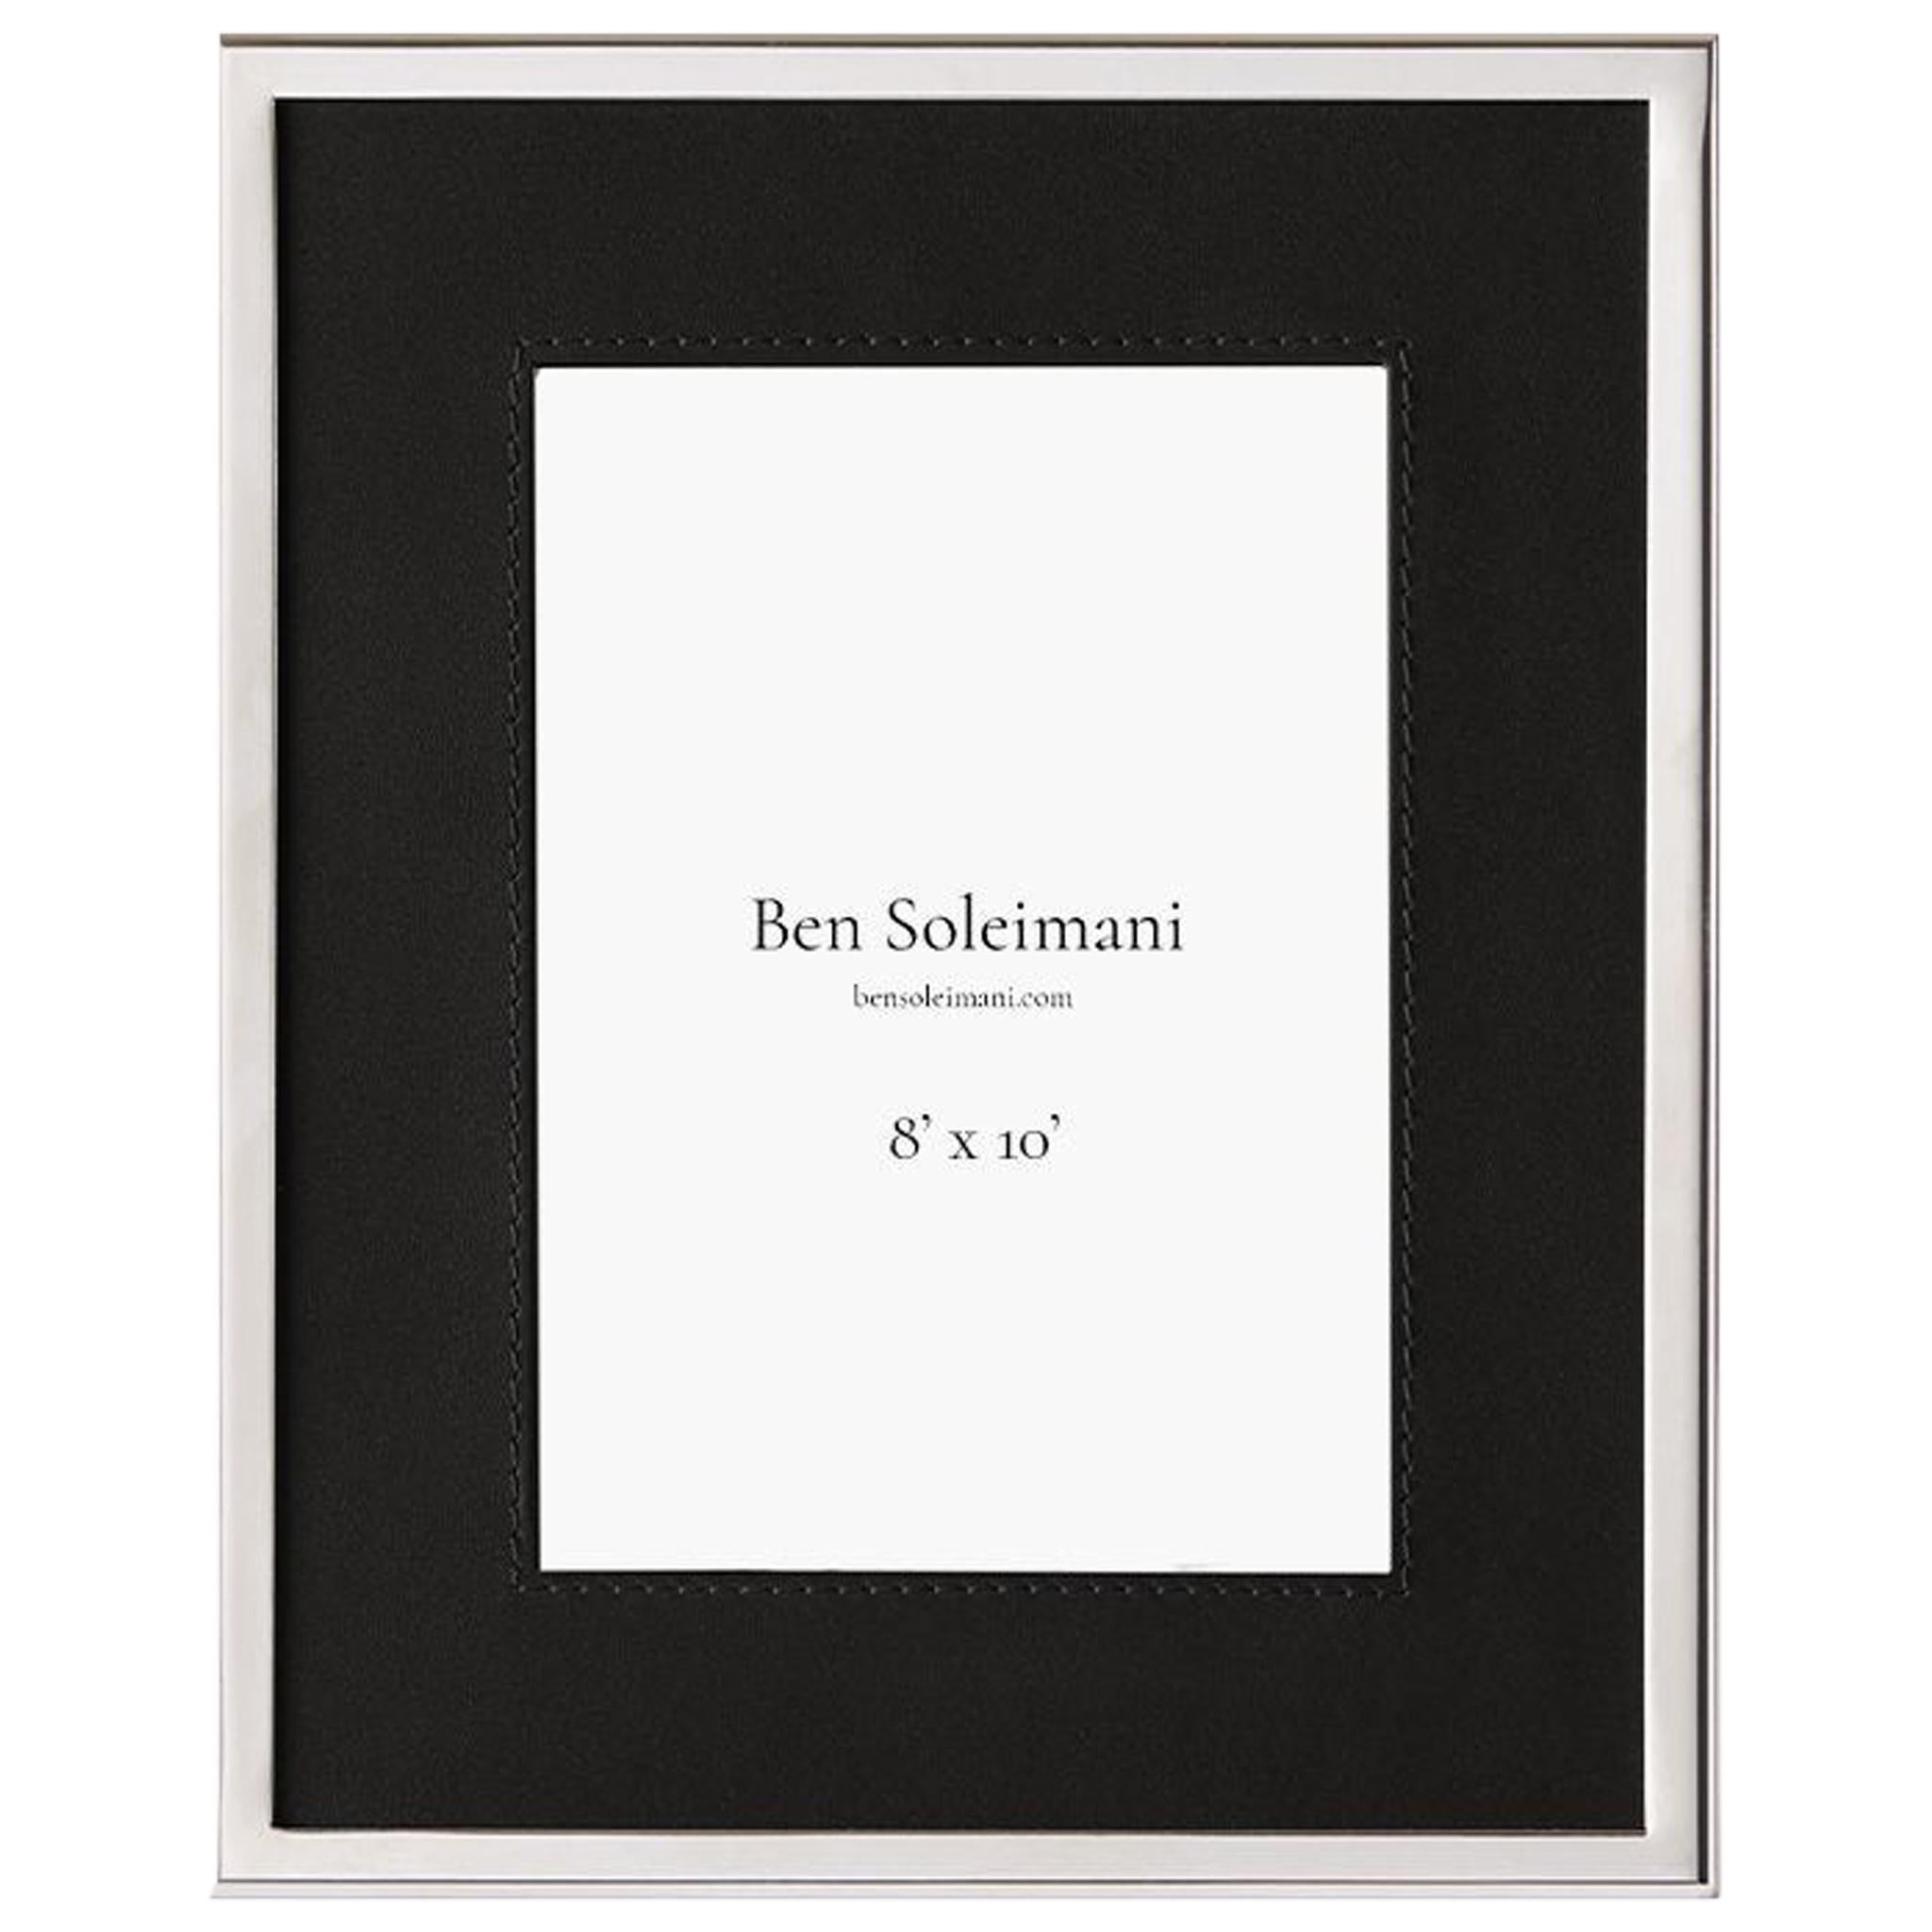 Ben Soleimani Orilla Picture Frame - Carbon 8" x 10" For Sale